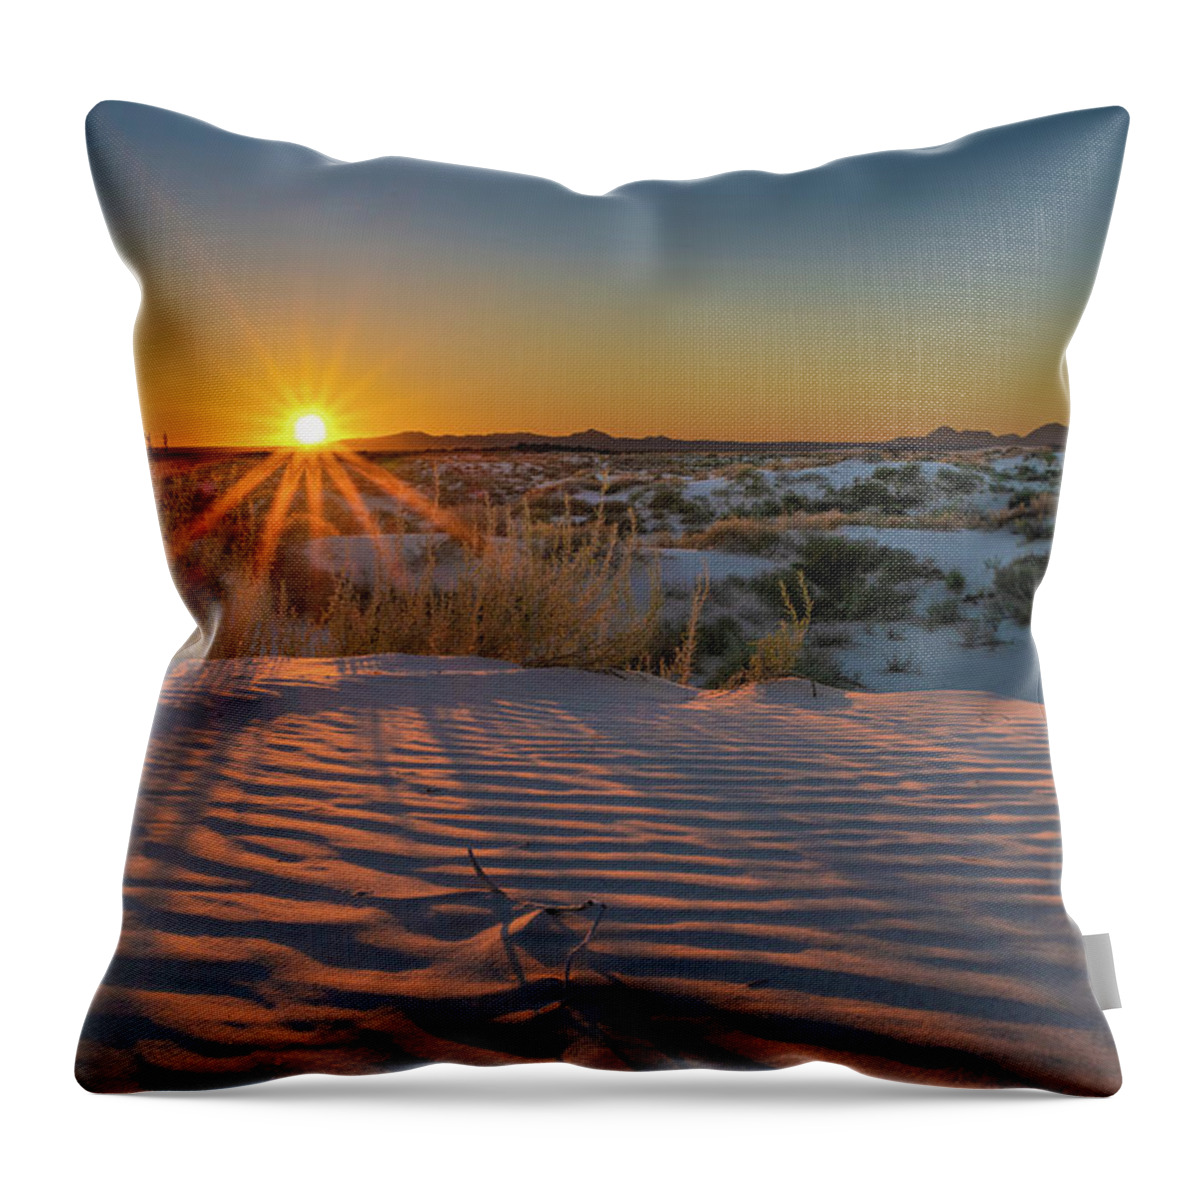 West Texas Throw Pillow featuring the photograph Gypsum Salt Dune Sunset by Erin K Images